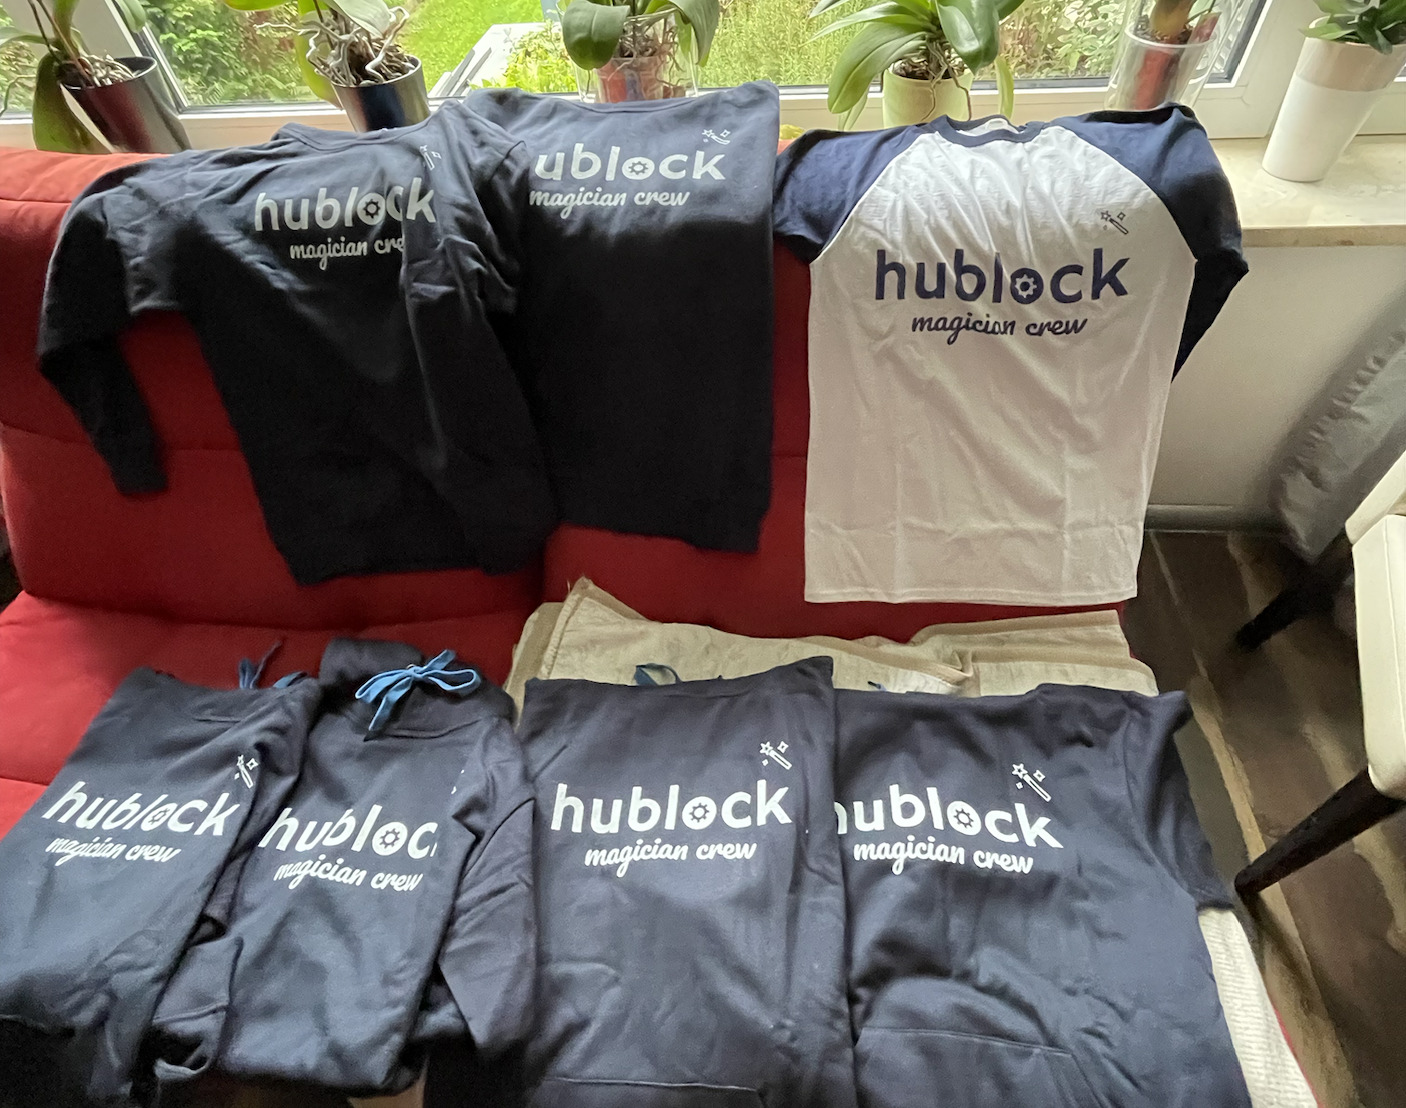 Apparel with Hublock's logo.